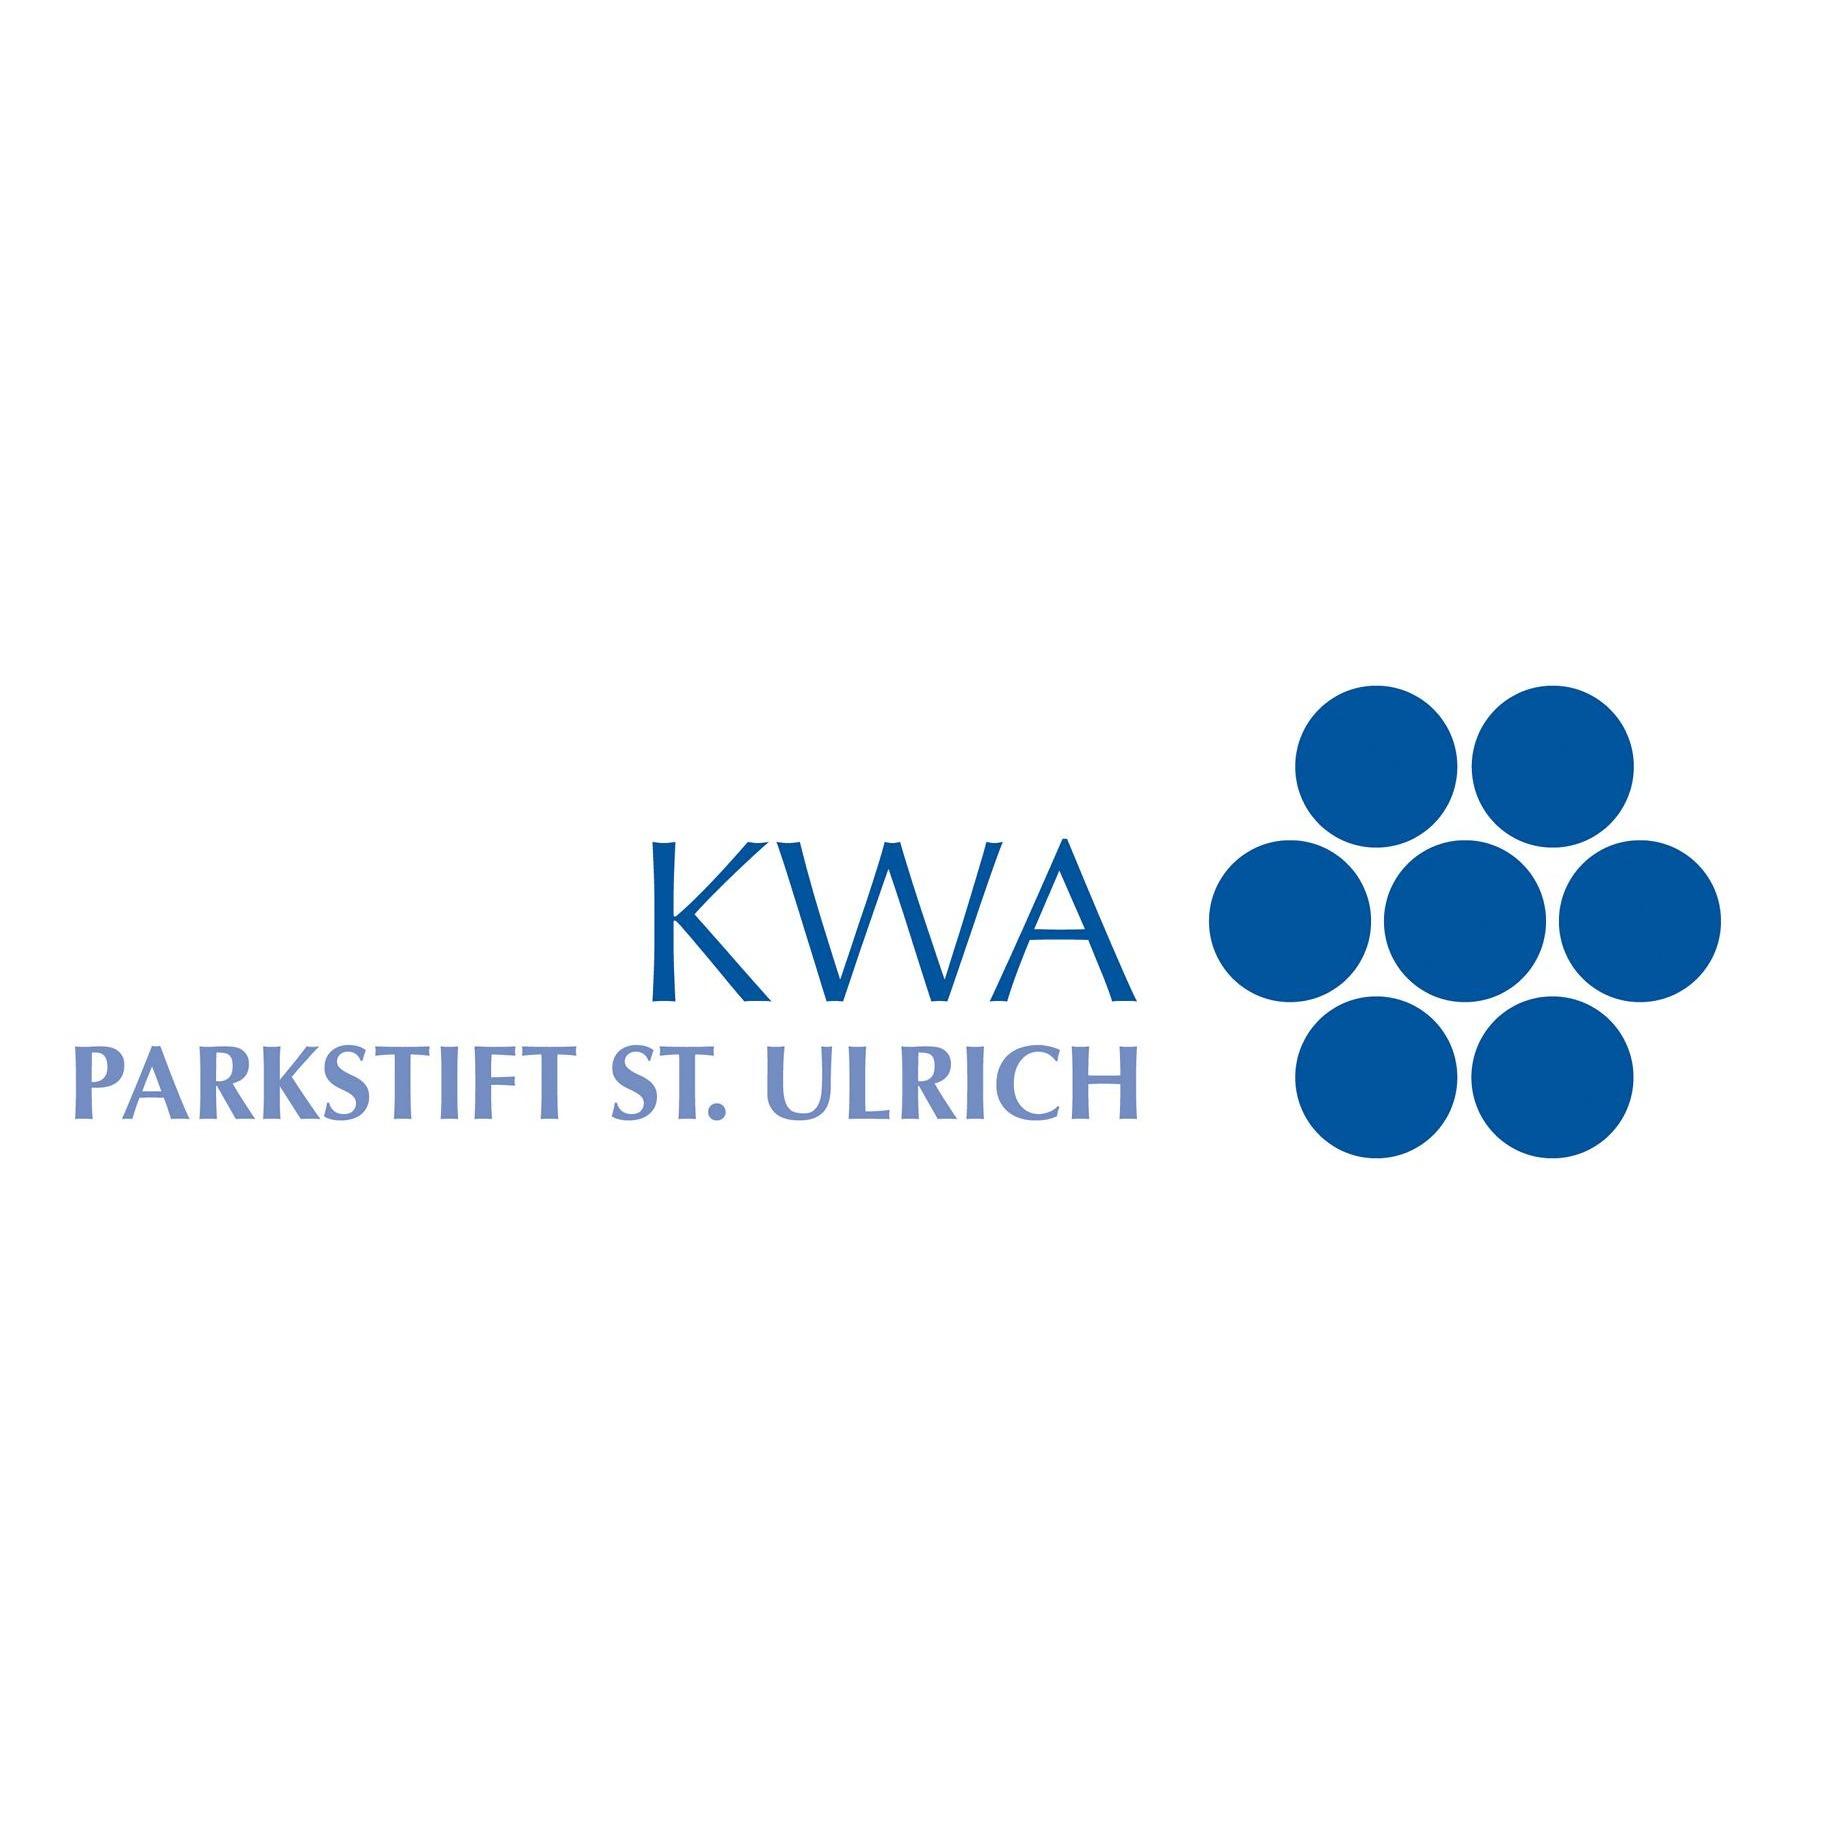 KWA Parkstift St. Ulrich